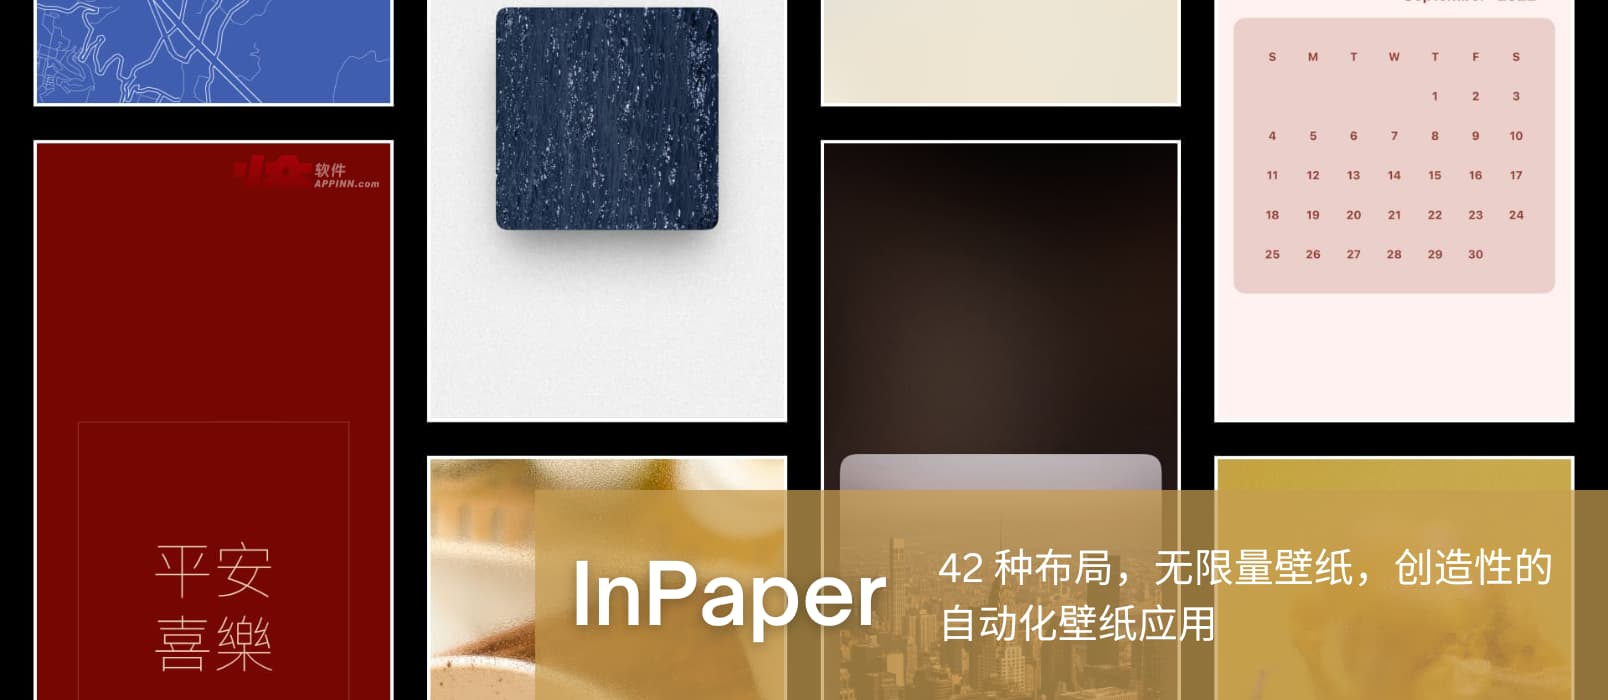 InPaper – 42 种布局，无限量壁纸，创造性的自动化壁纸应用[iPhone/iPad]